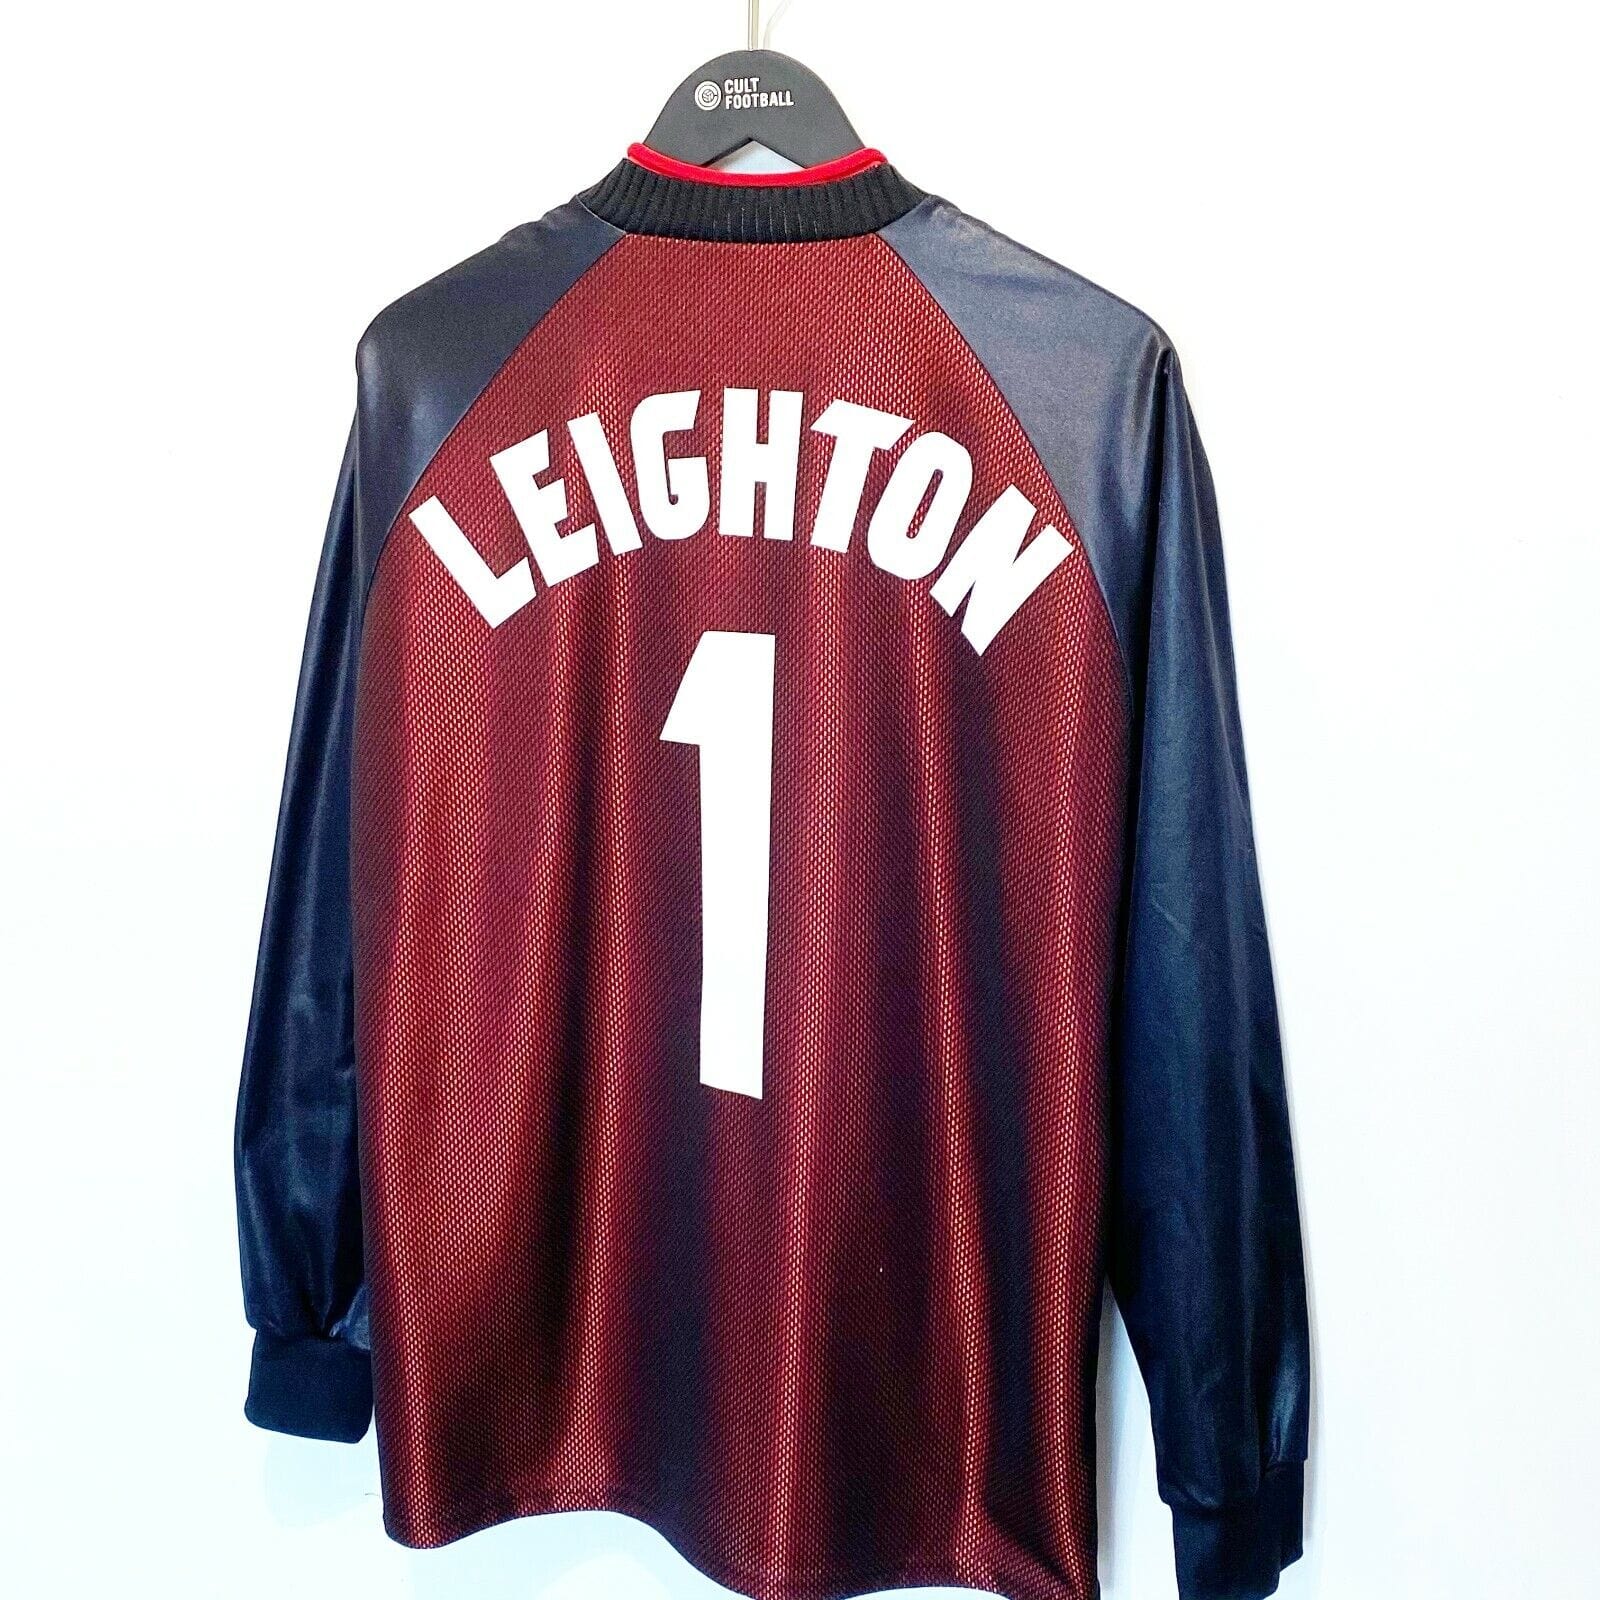 1998 LEIGHTON #1 Scotland World Cup 98 Vintage Umbro Home GK Football Shirt (M)